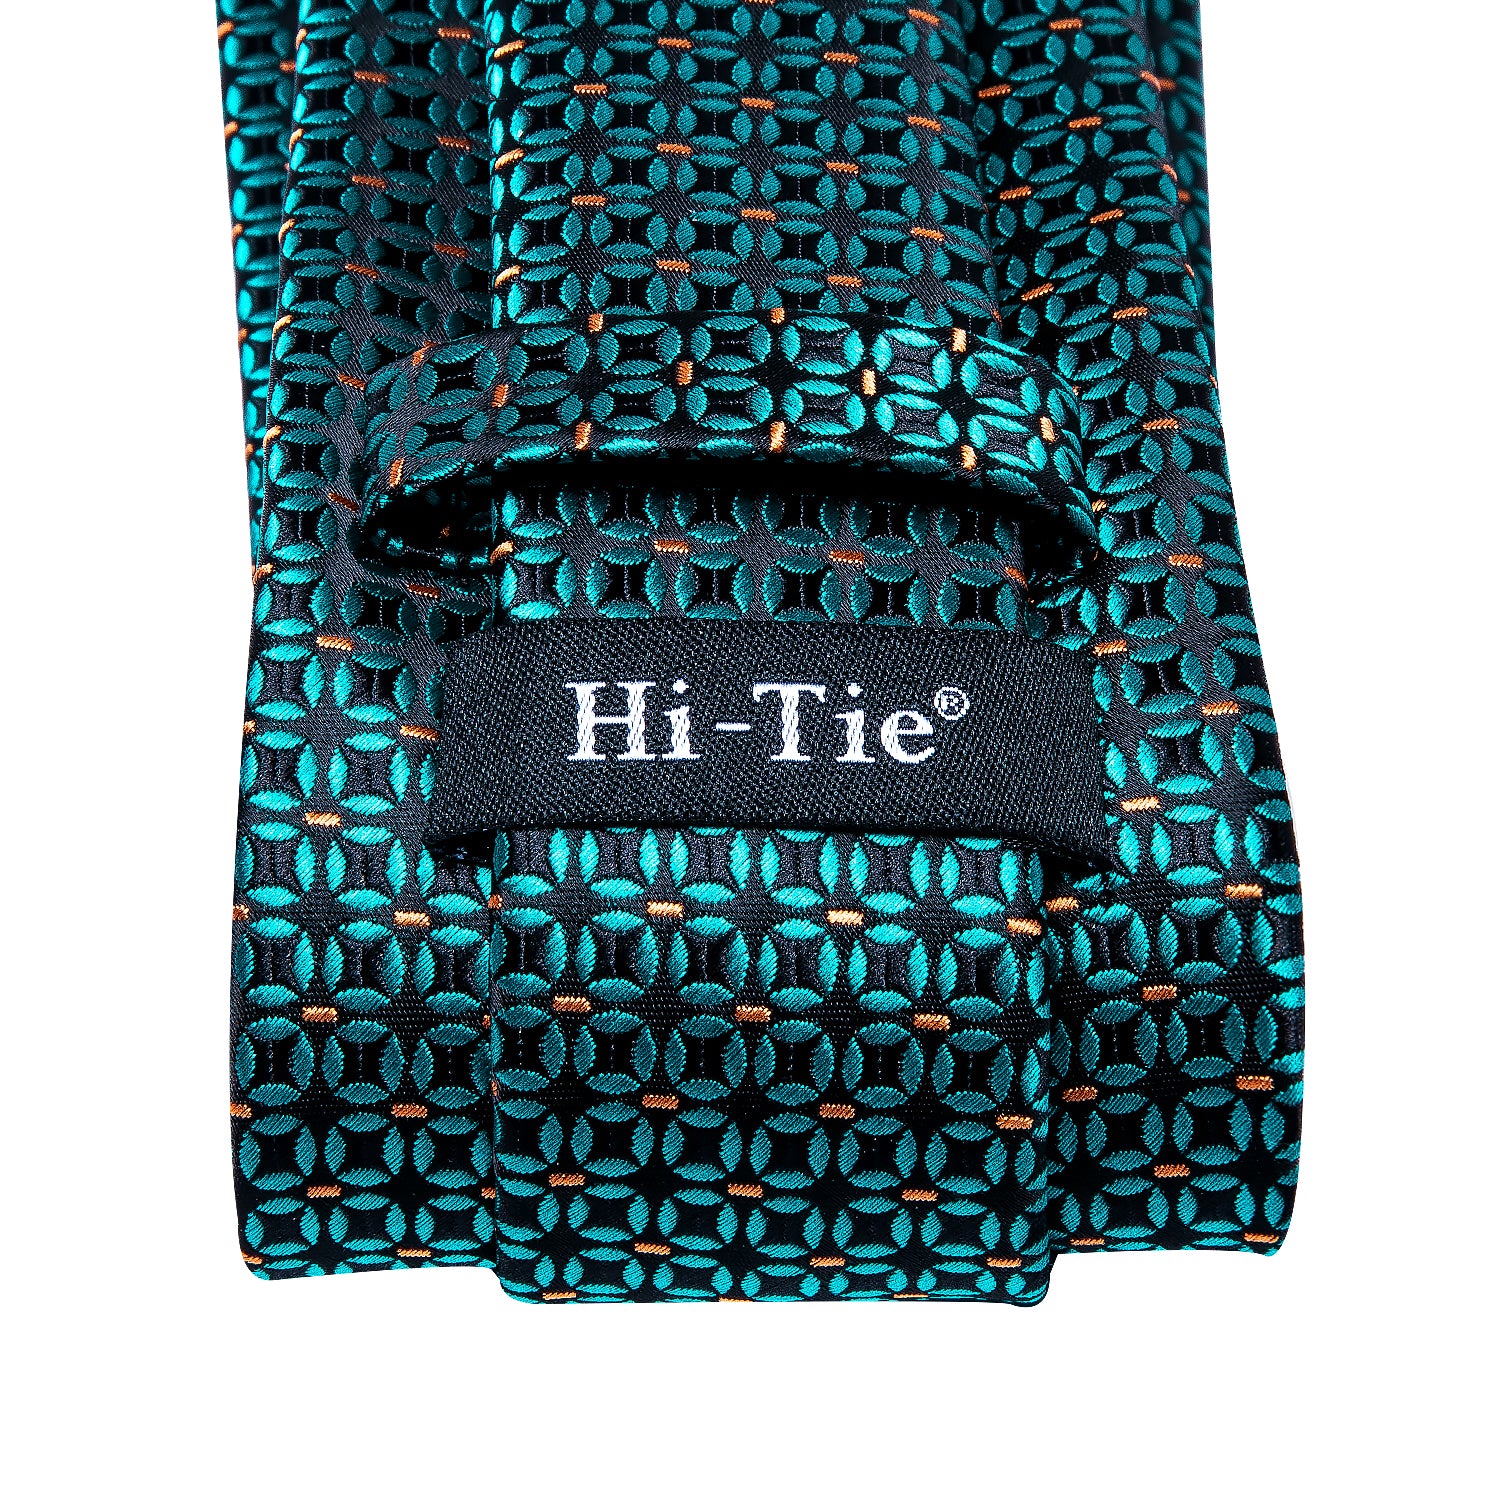 Turquoise Polka Dot Tie Pocket Square Cufflinks Set